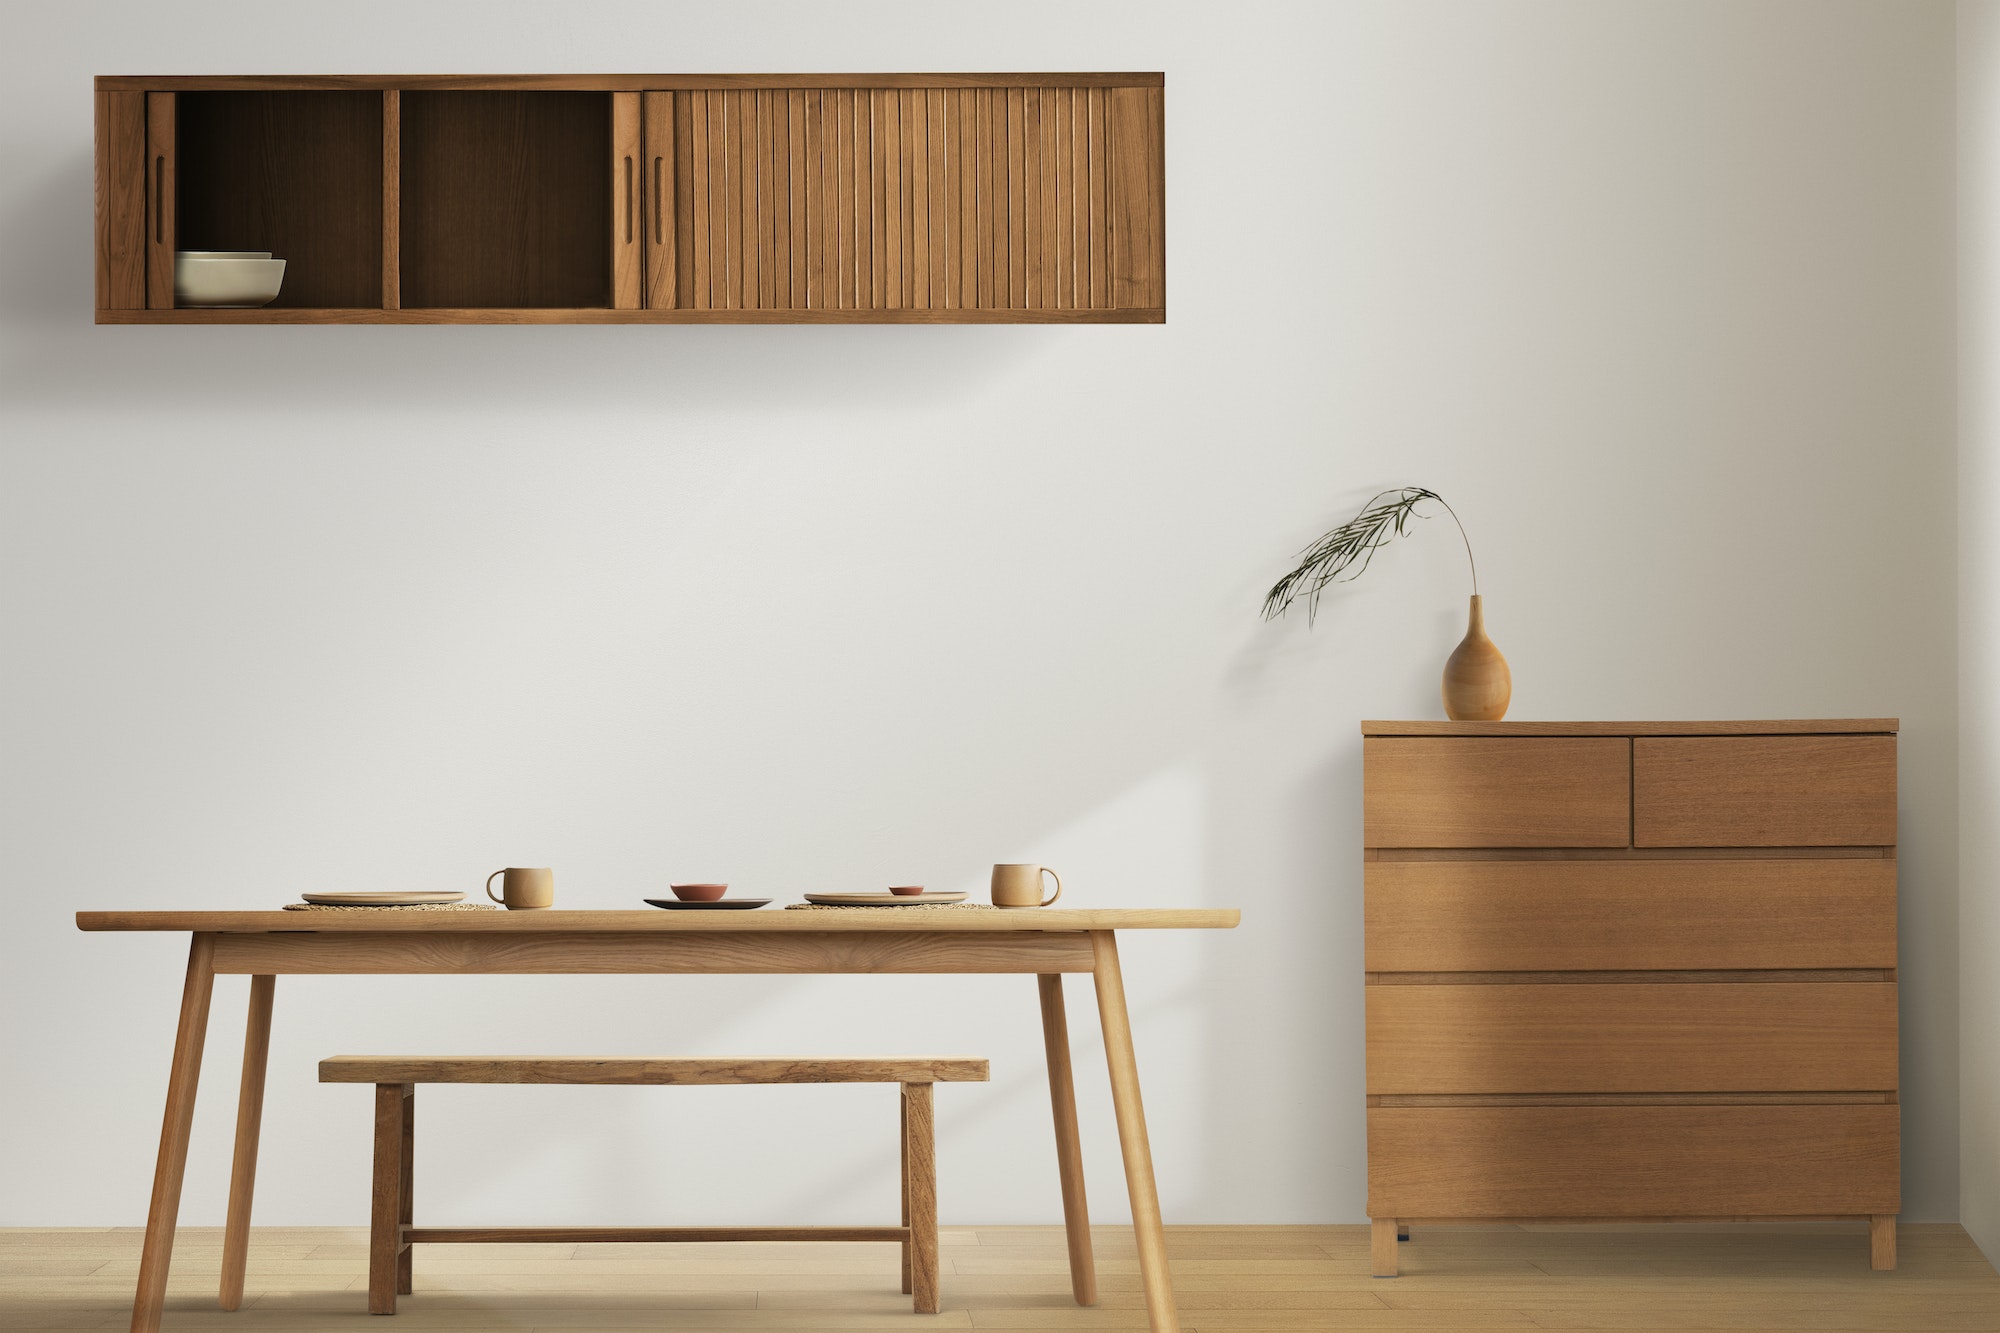 Wooden furniture in minimal dining room interior design